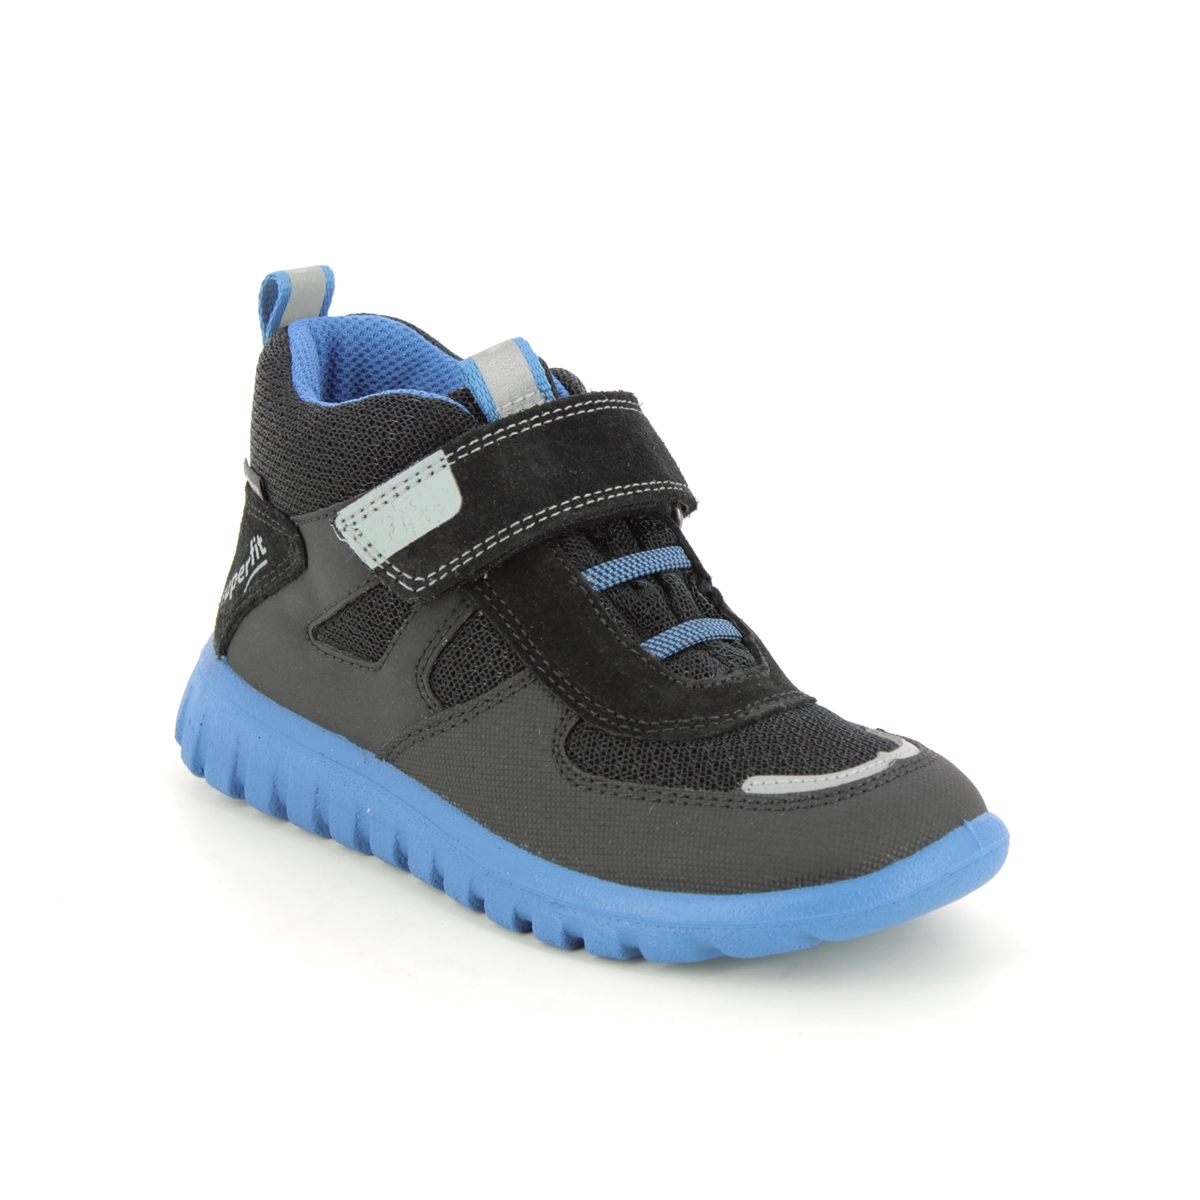 Superfit Sport7 Mini Gtx Black-Blue Kids Boys Boots 1006196-0000 In Size 28 In Plain Black-Blue For kids